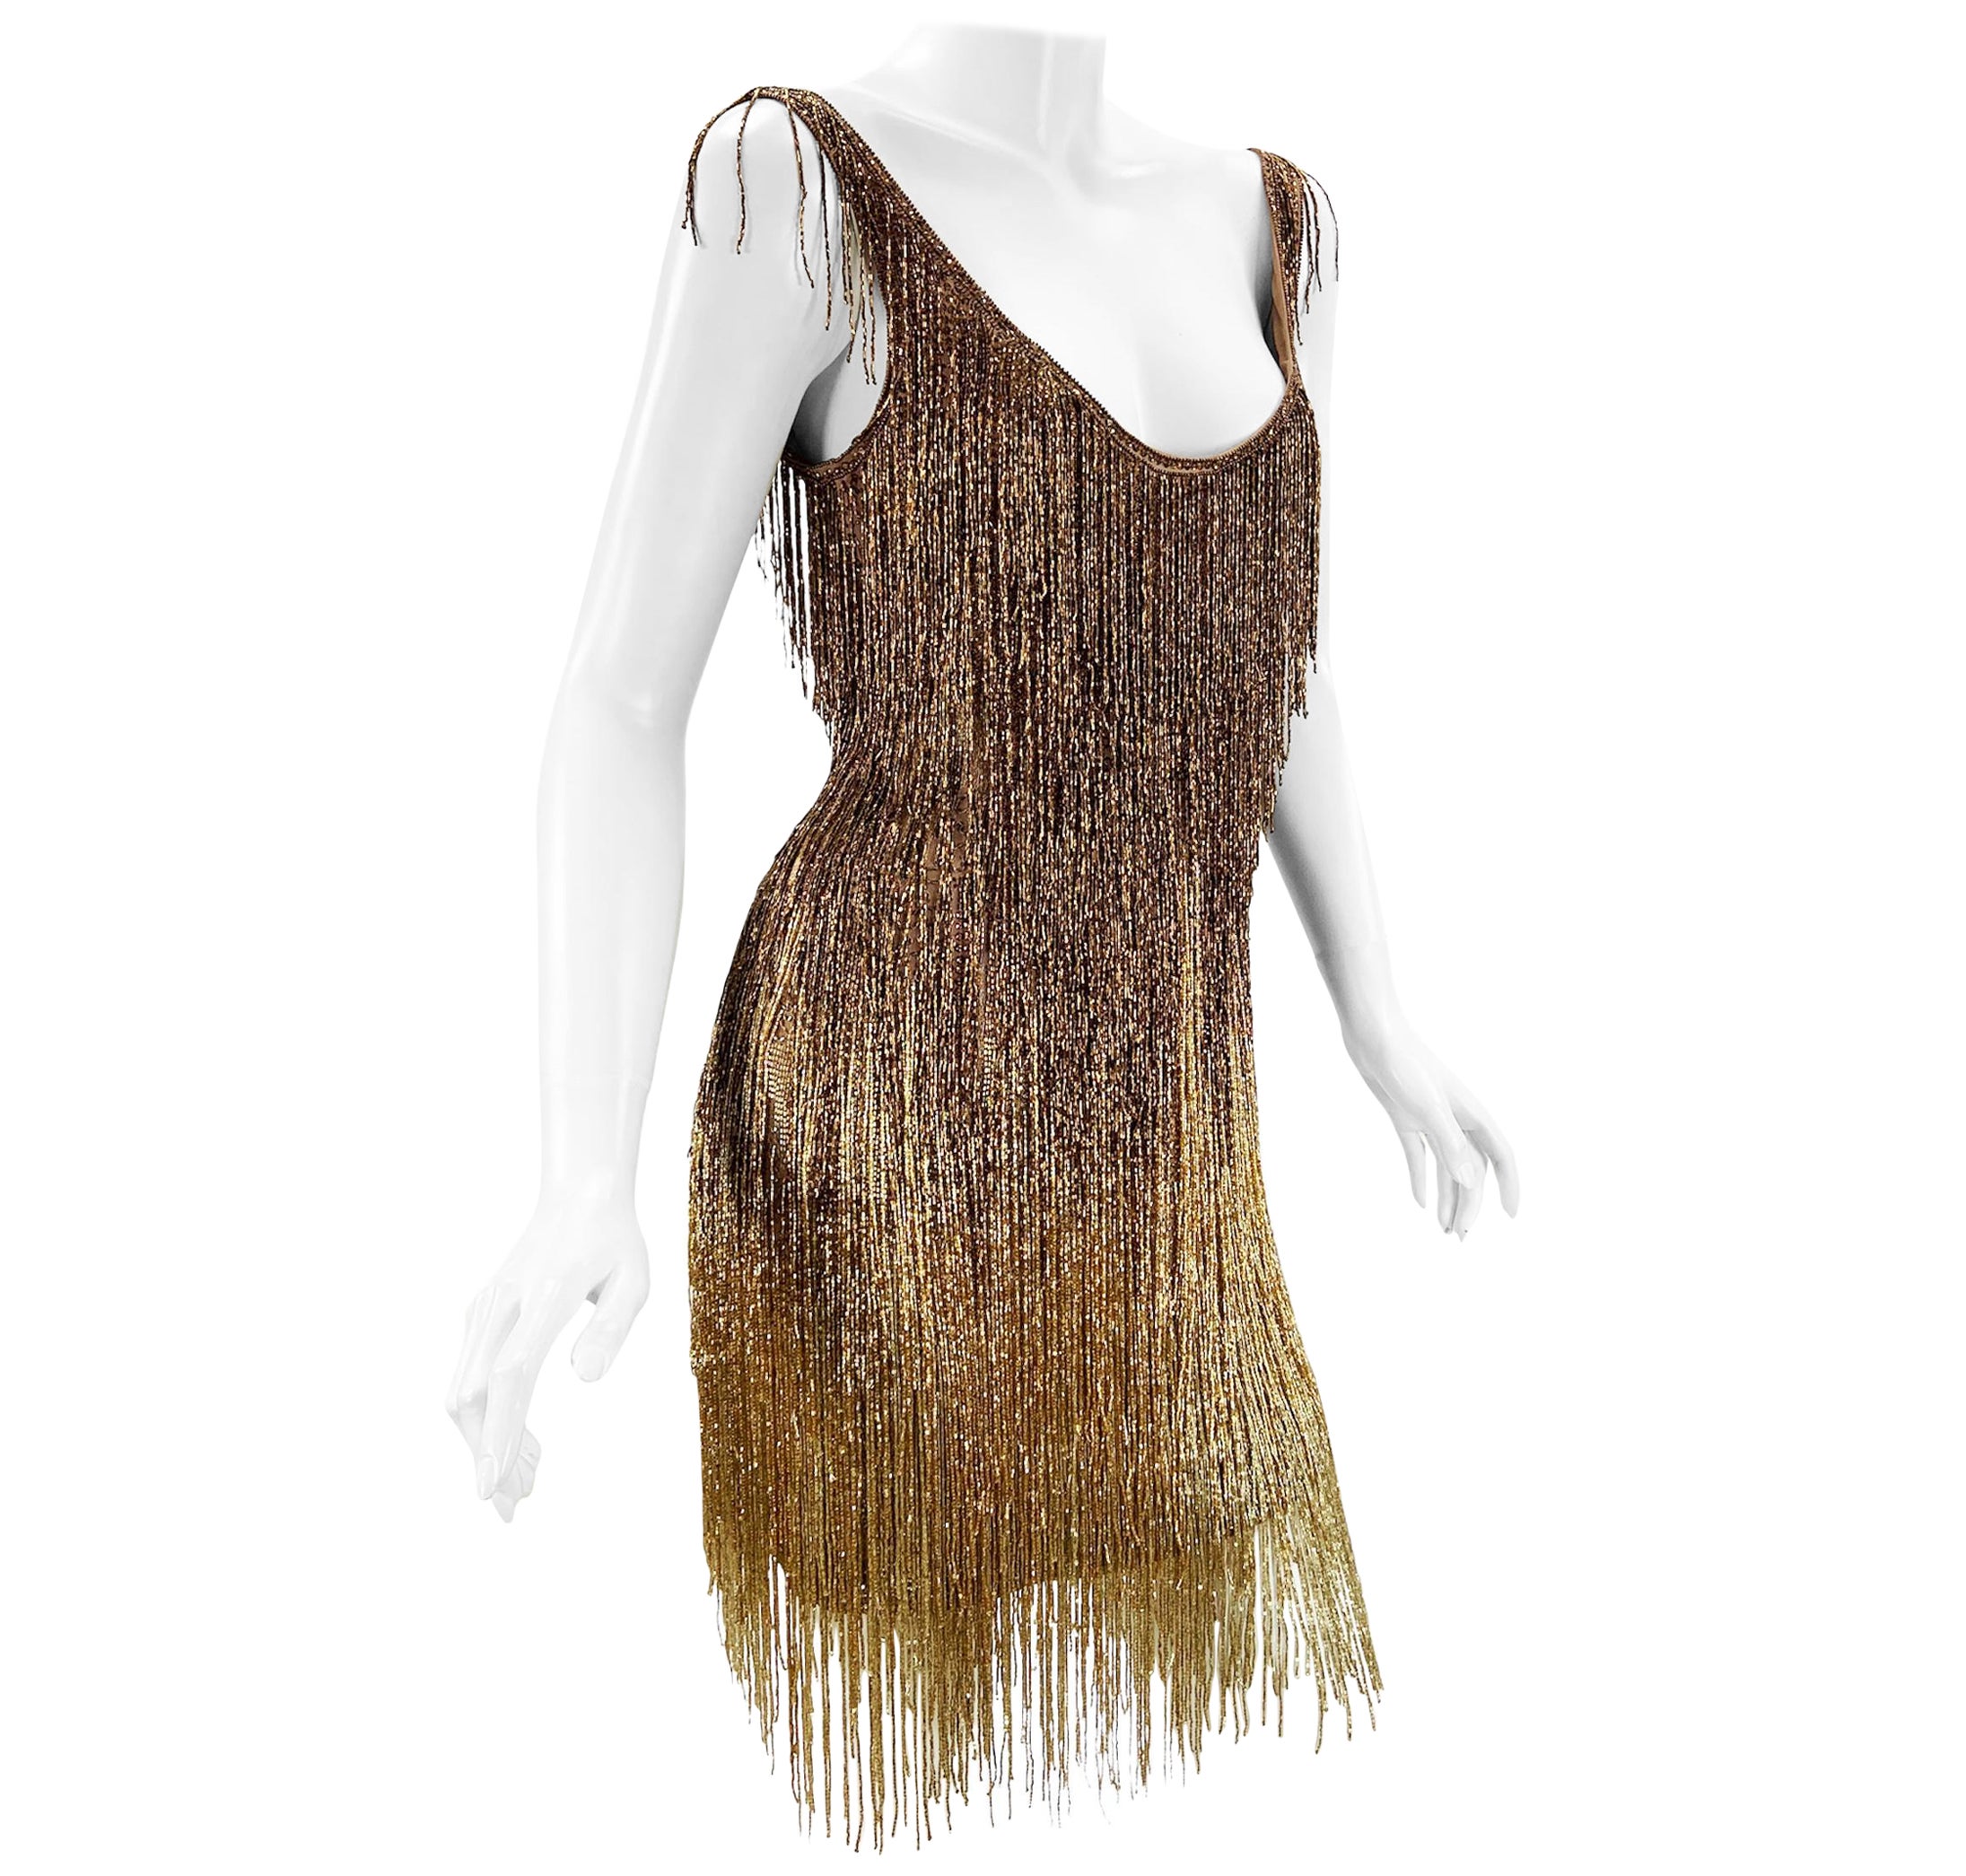 Iconic MUSEUM Roberto Cavalli Fringe Beaded Dress as seen on TAYLOR SWIFT It. 40